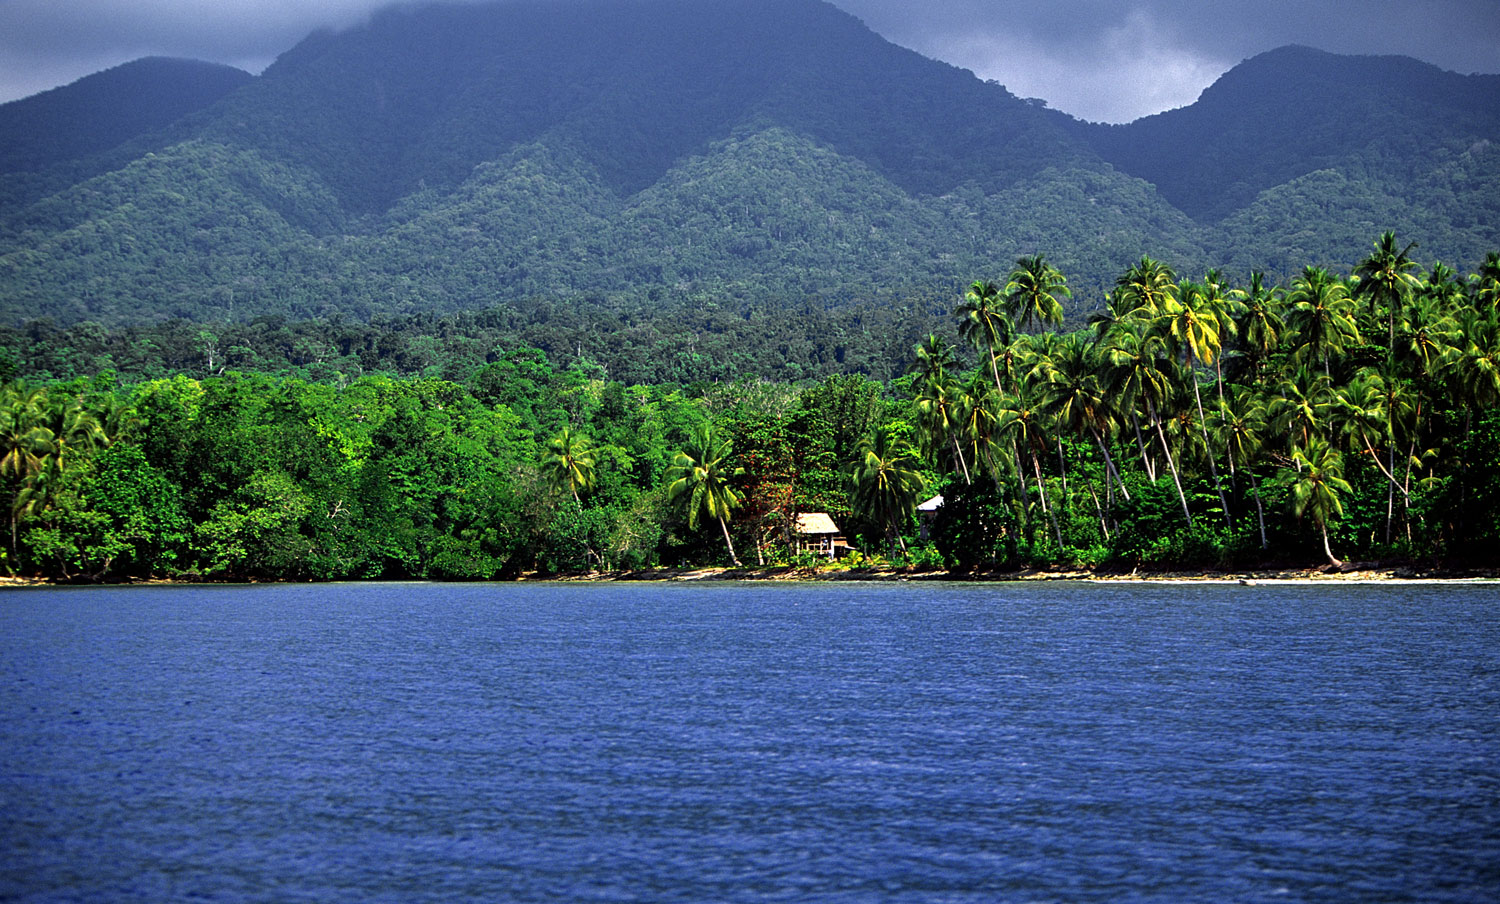 Ocean and jungle scene in the Solomon Islands